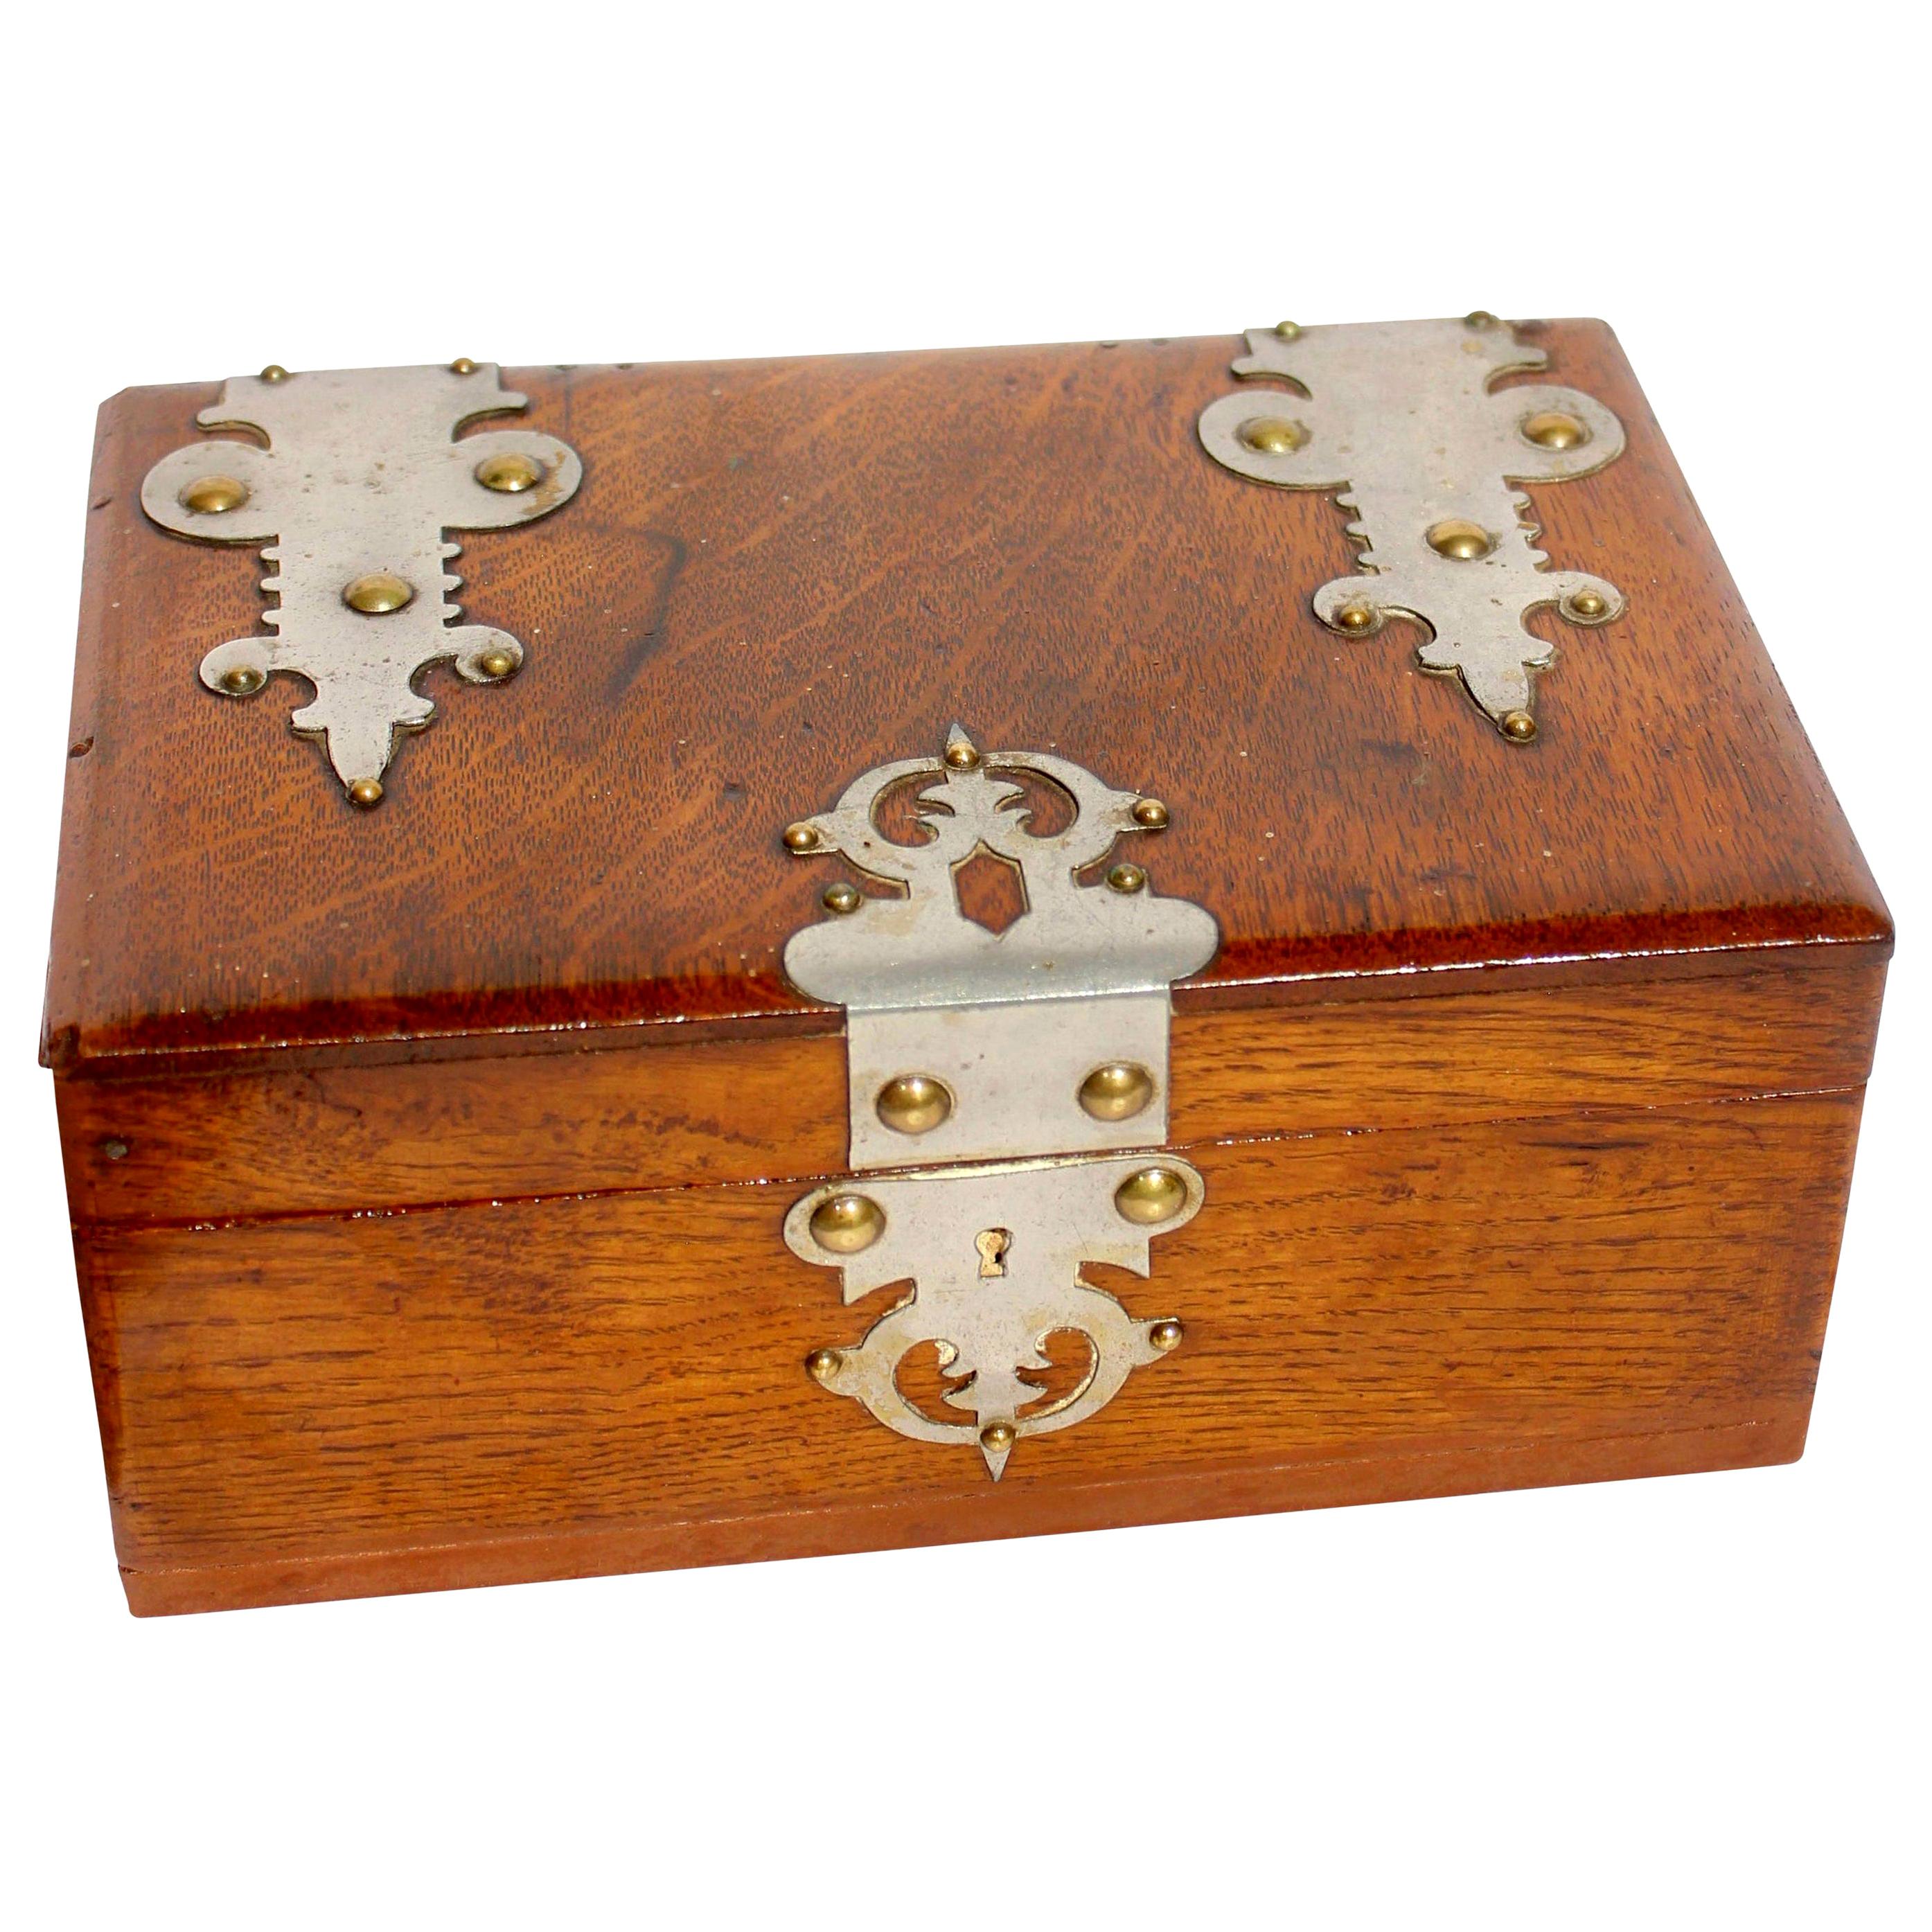 Solid Oak Arts & Crafts Box with Decorative Metal Work, circa 1890